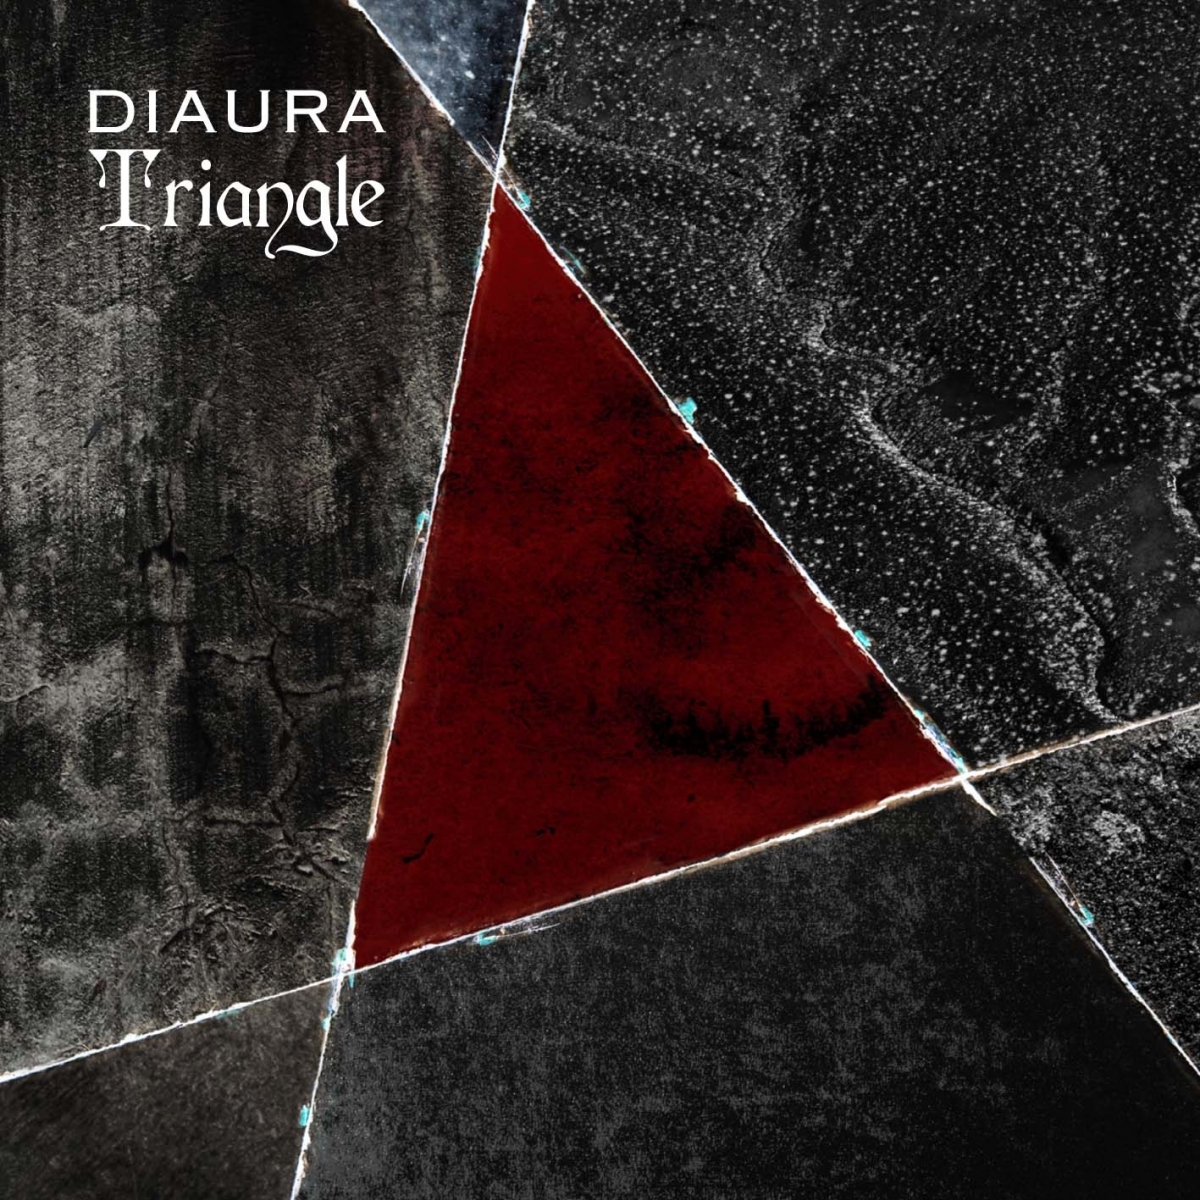 Diaura_3rd_full_album_triangle__%e5%88%9d%e5%9b%9e%e9%99%90%e5%ae%9ab-type%e7%9b%a4__cd_dvd_